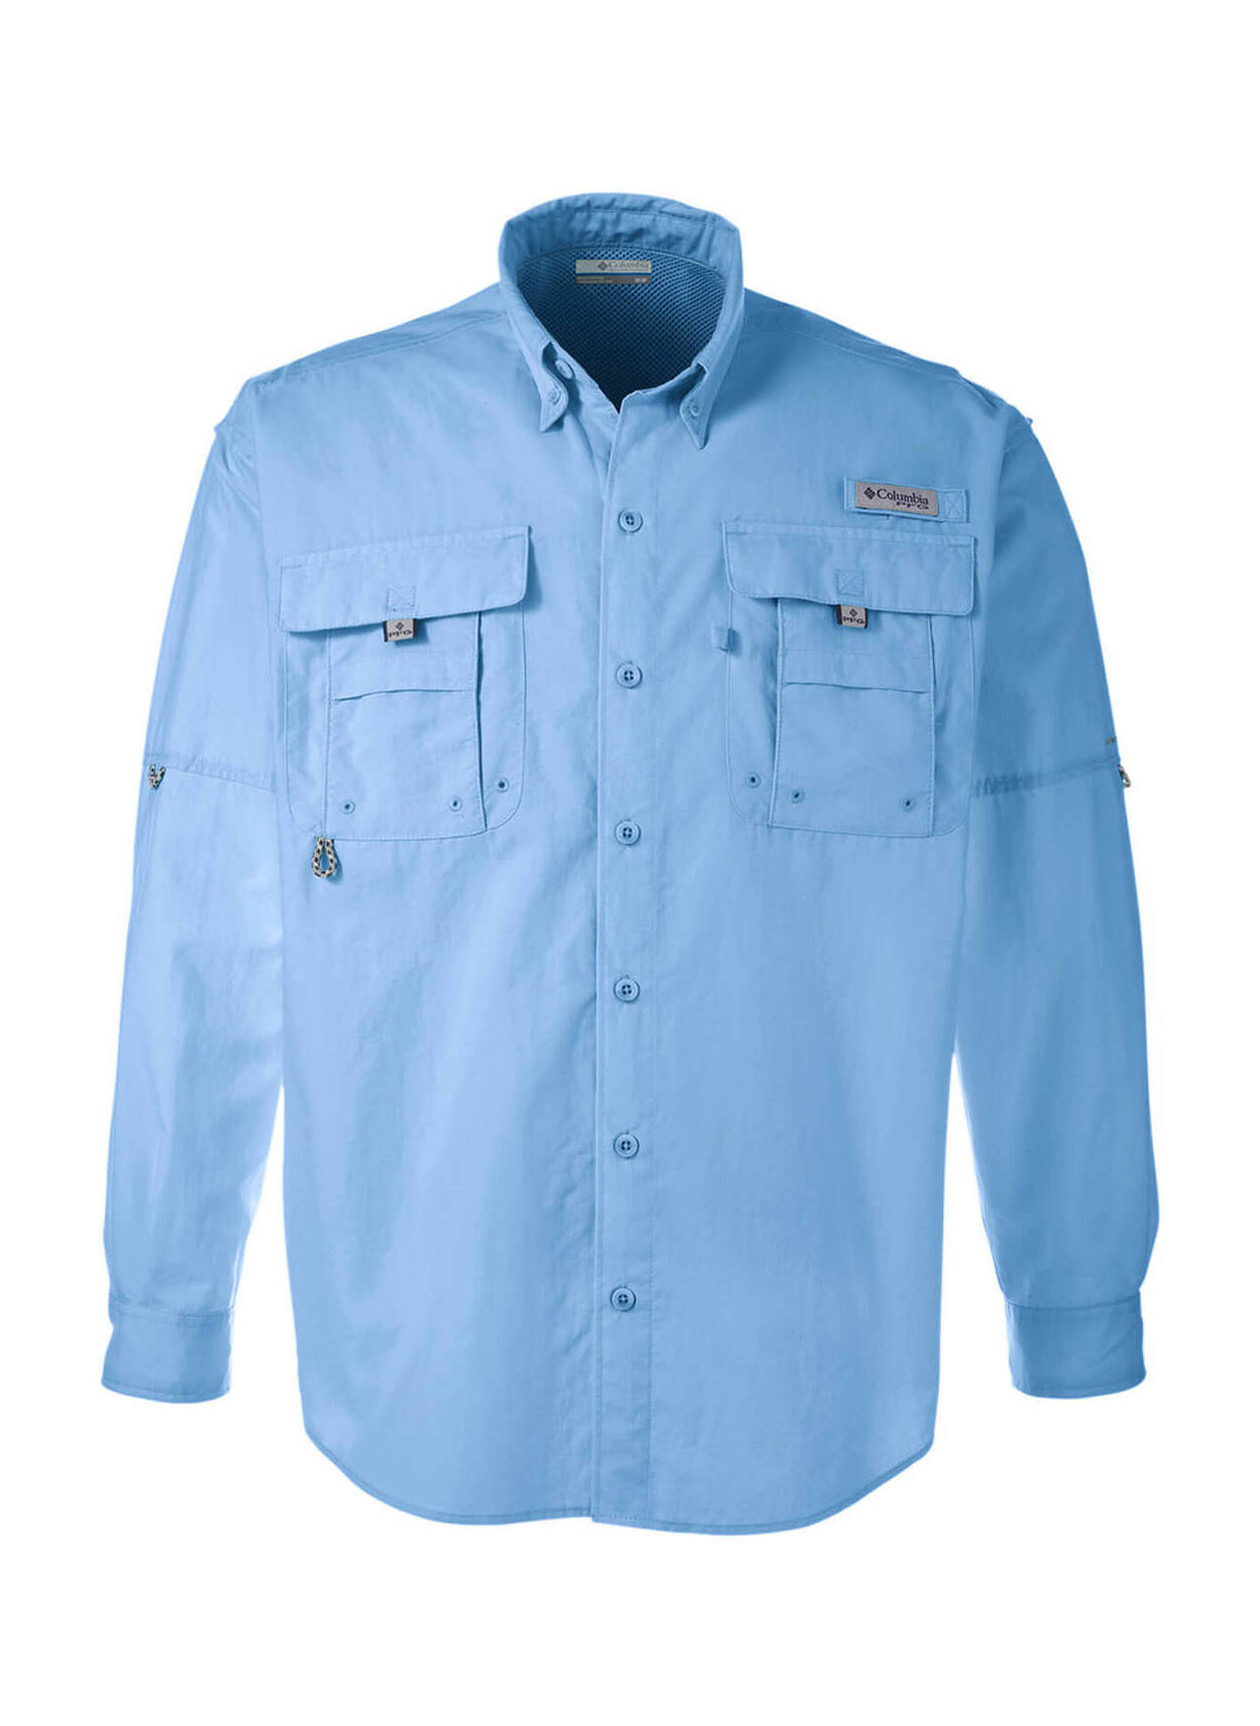 Men's Columbia Sportswear PFG XL Fishing Shirt Rod Loop Khaki